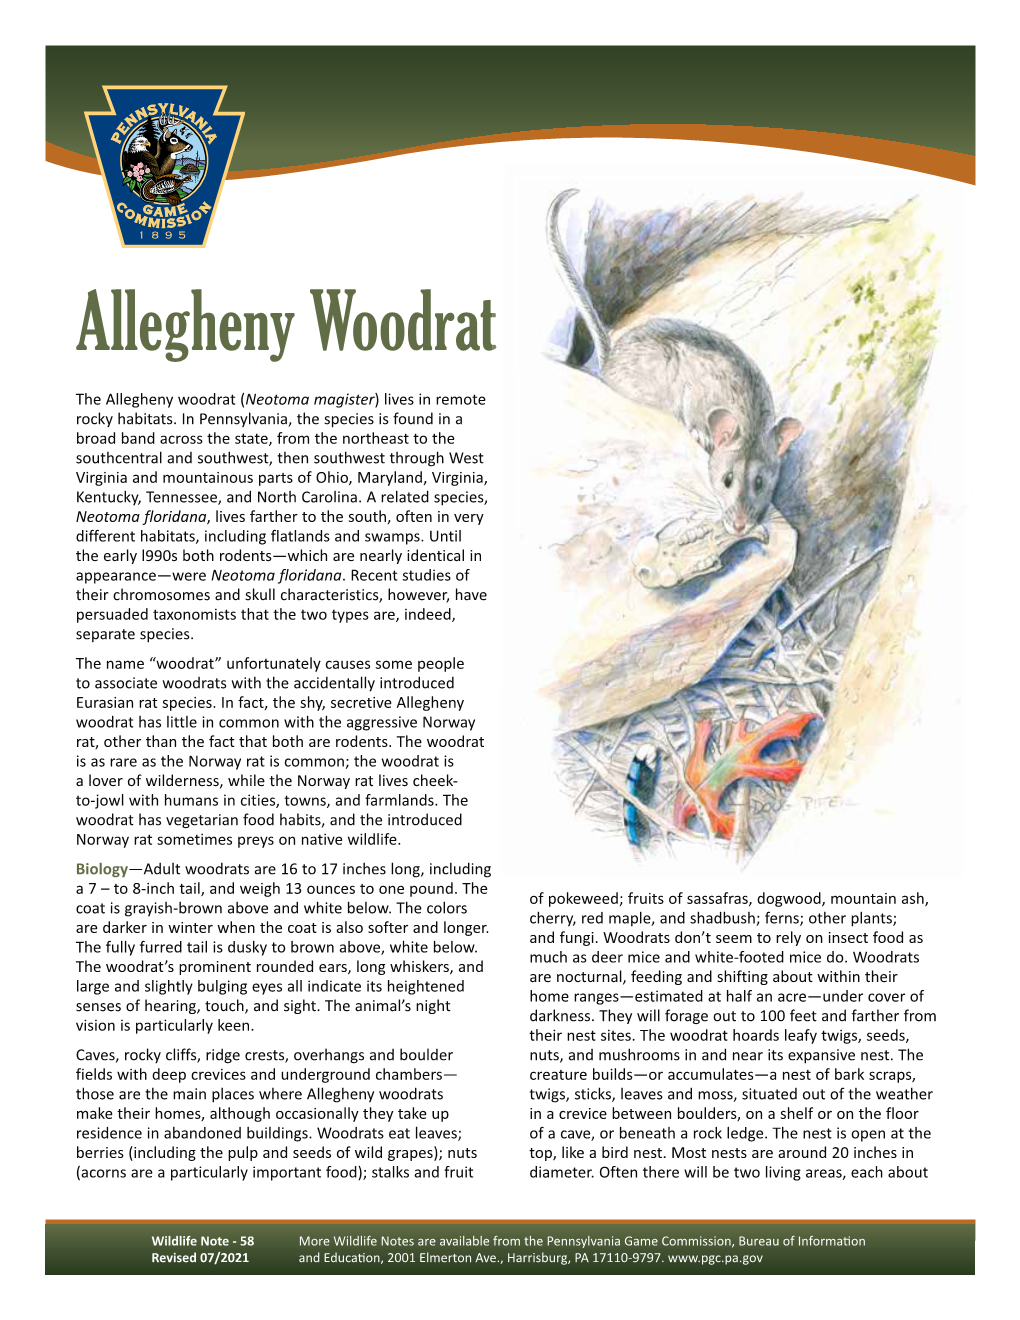 Allegheny Woodrat Wildlife Note